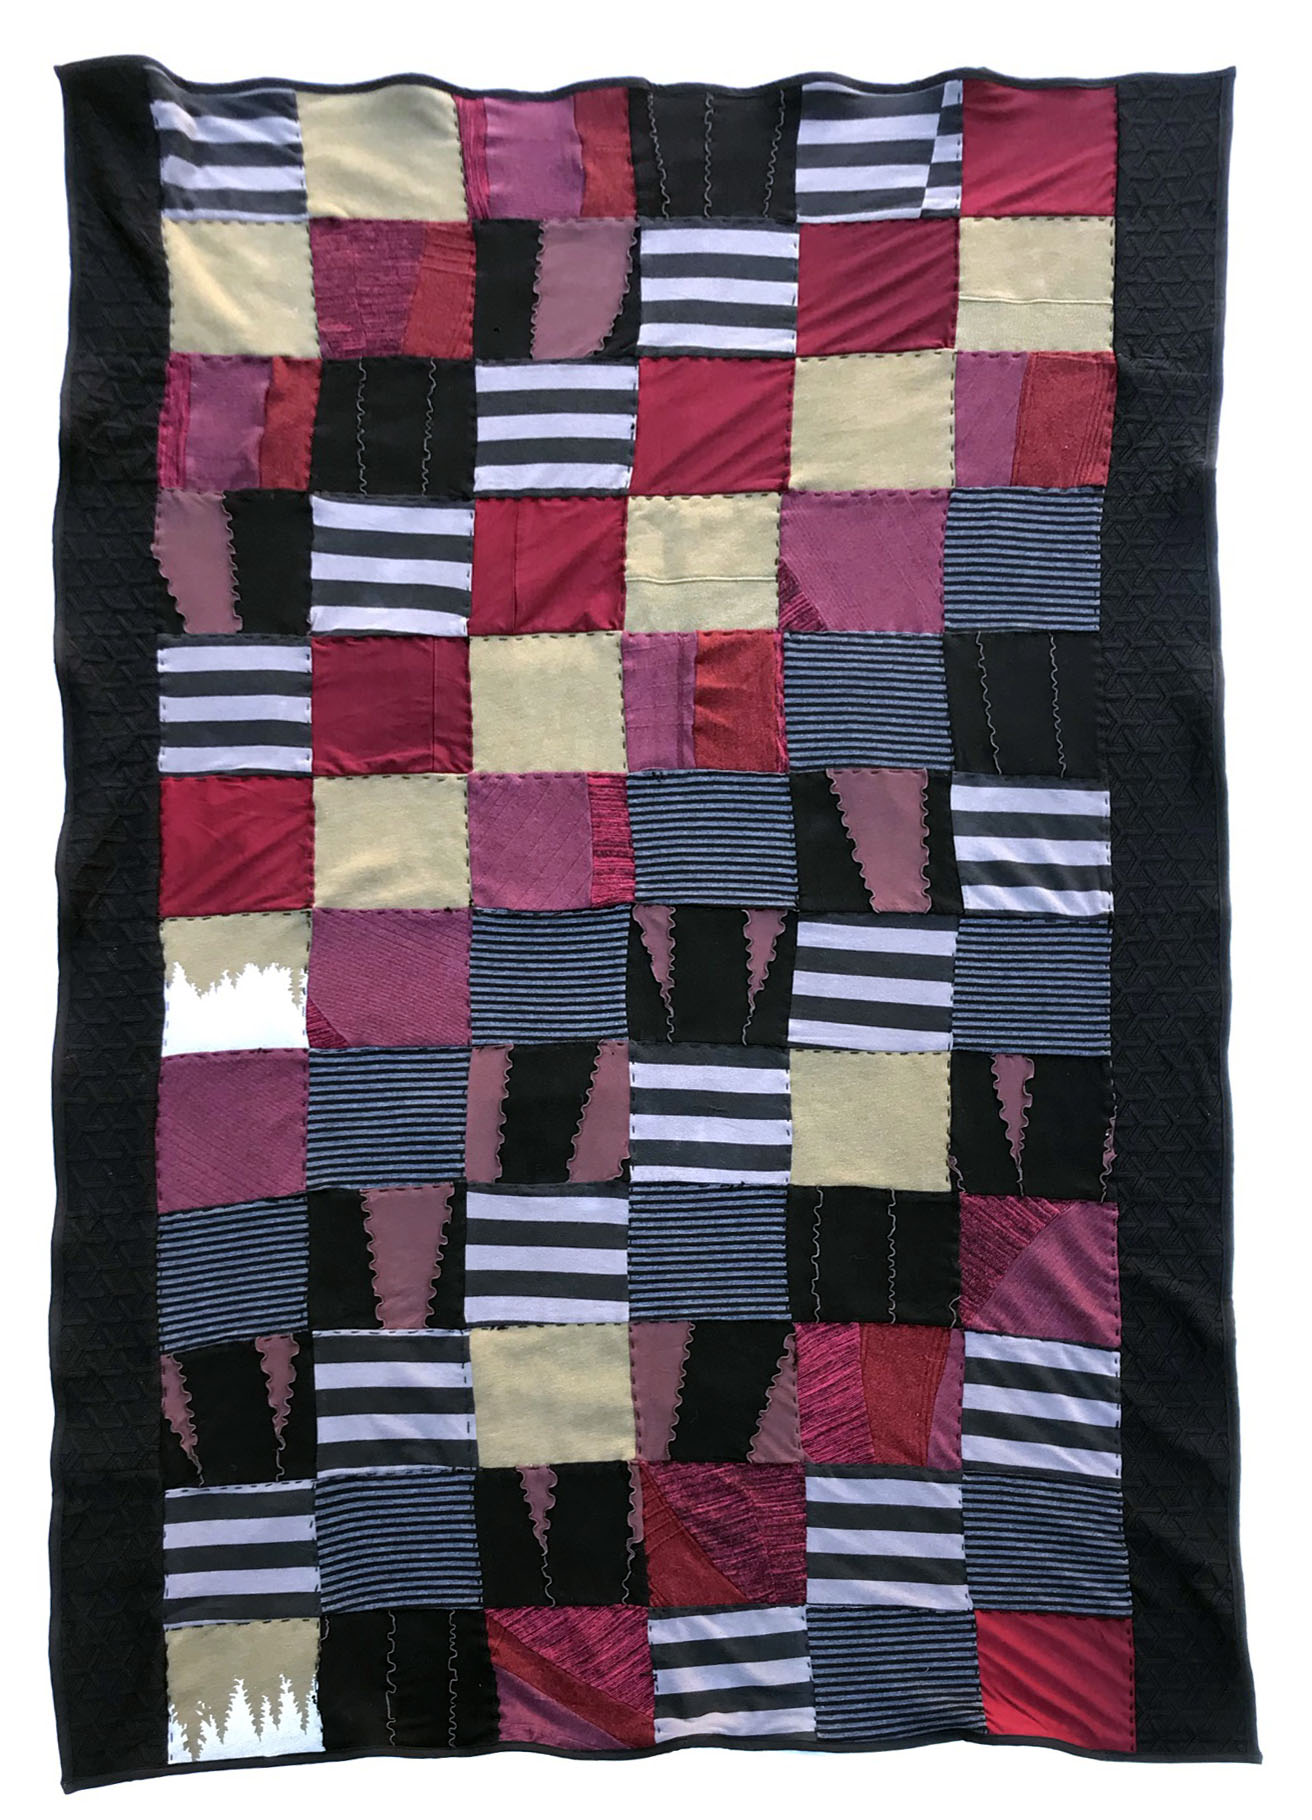 Memorial Quilt made out of Lora Wereb's clothing by Santa Barbara Seamstress